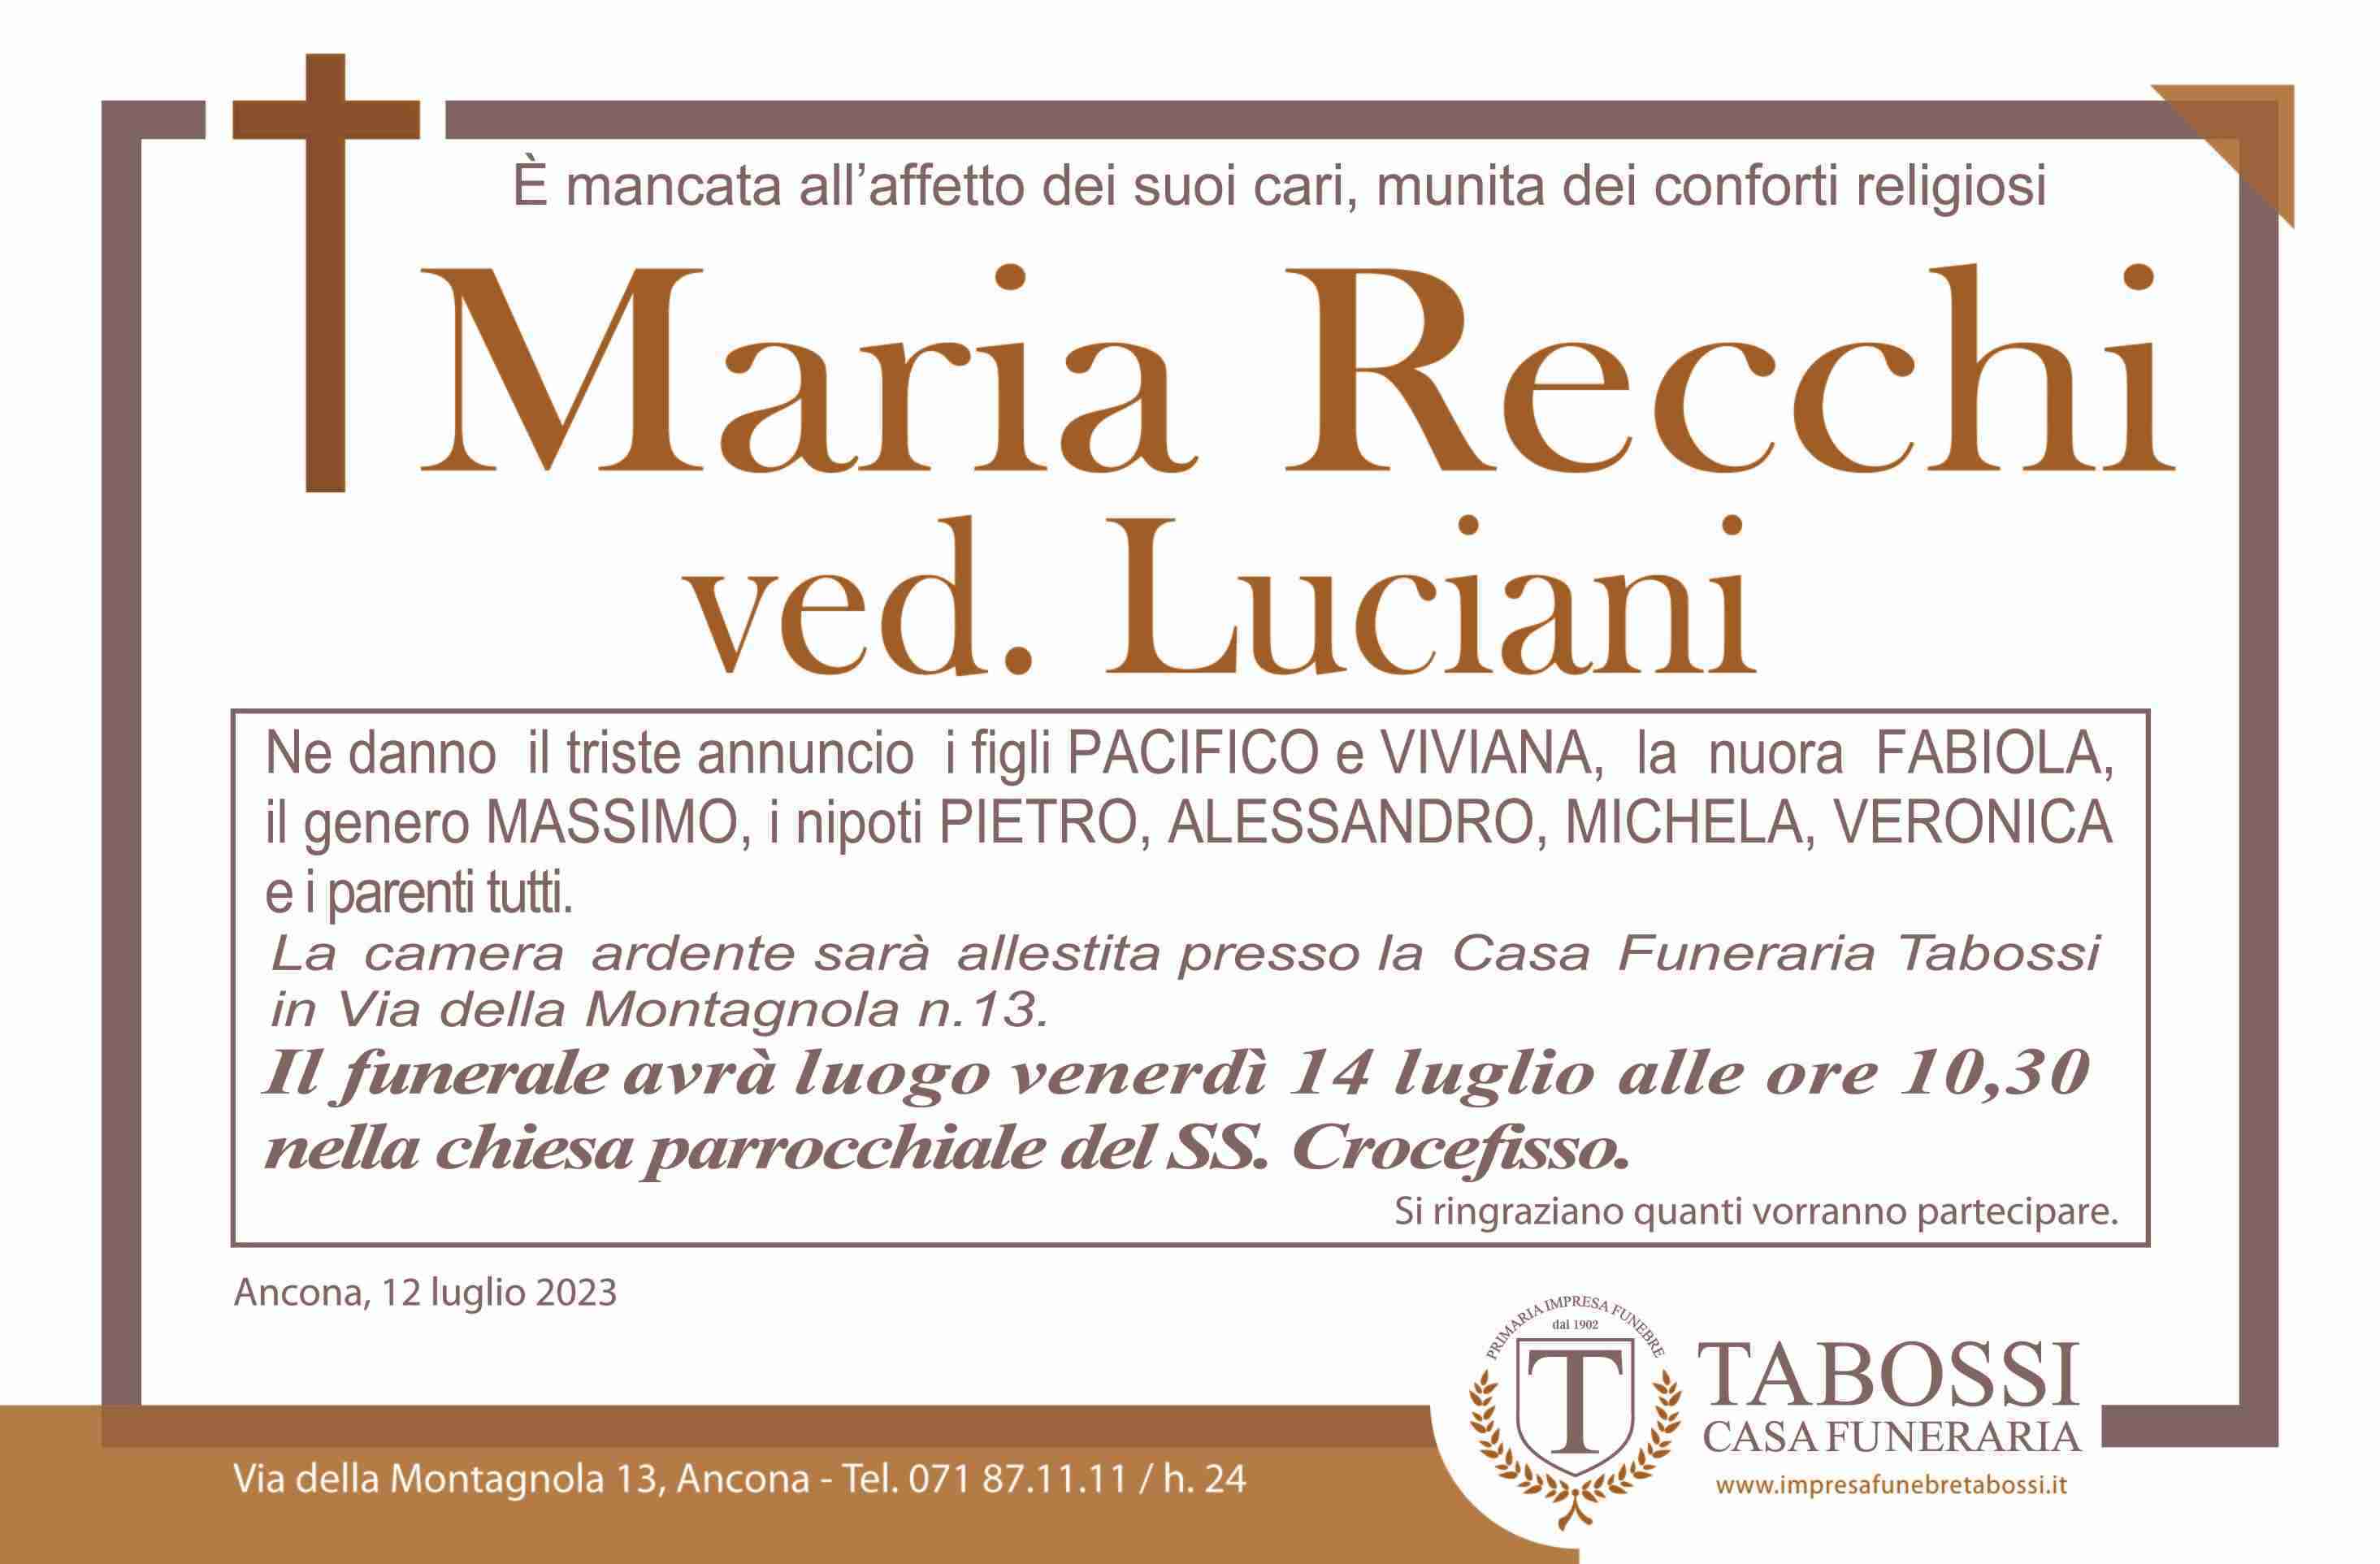 Maria Recchi